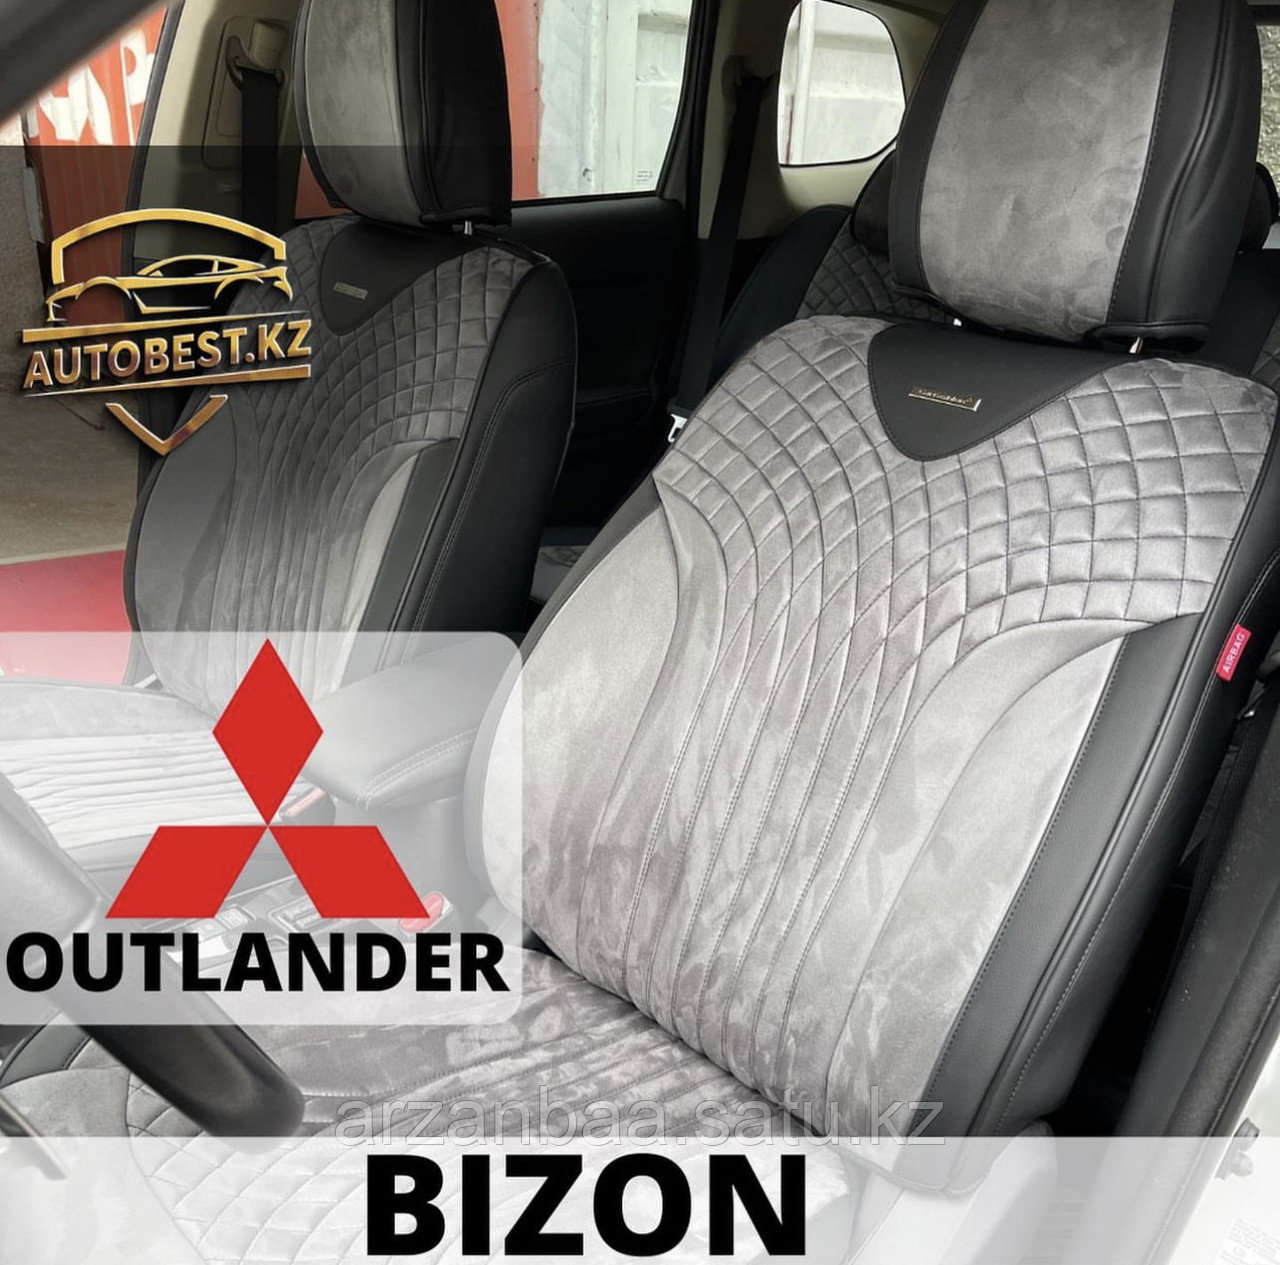 Outlander Mitsubishi авточехлы / авто чехлы / чехлы для авто Аутлендер